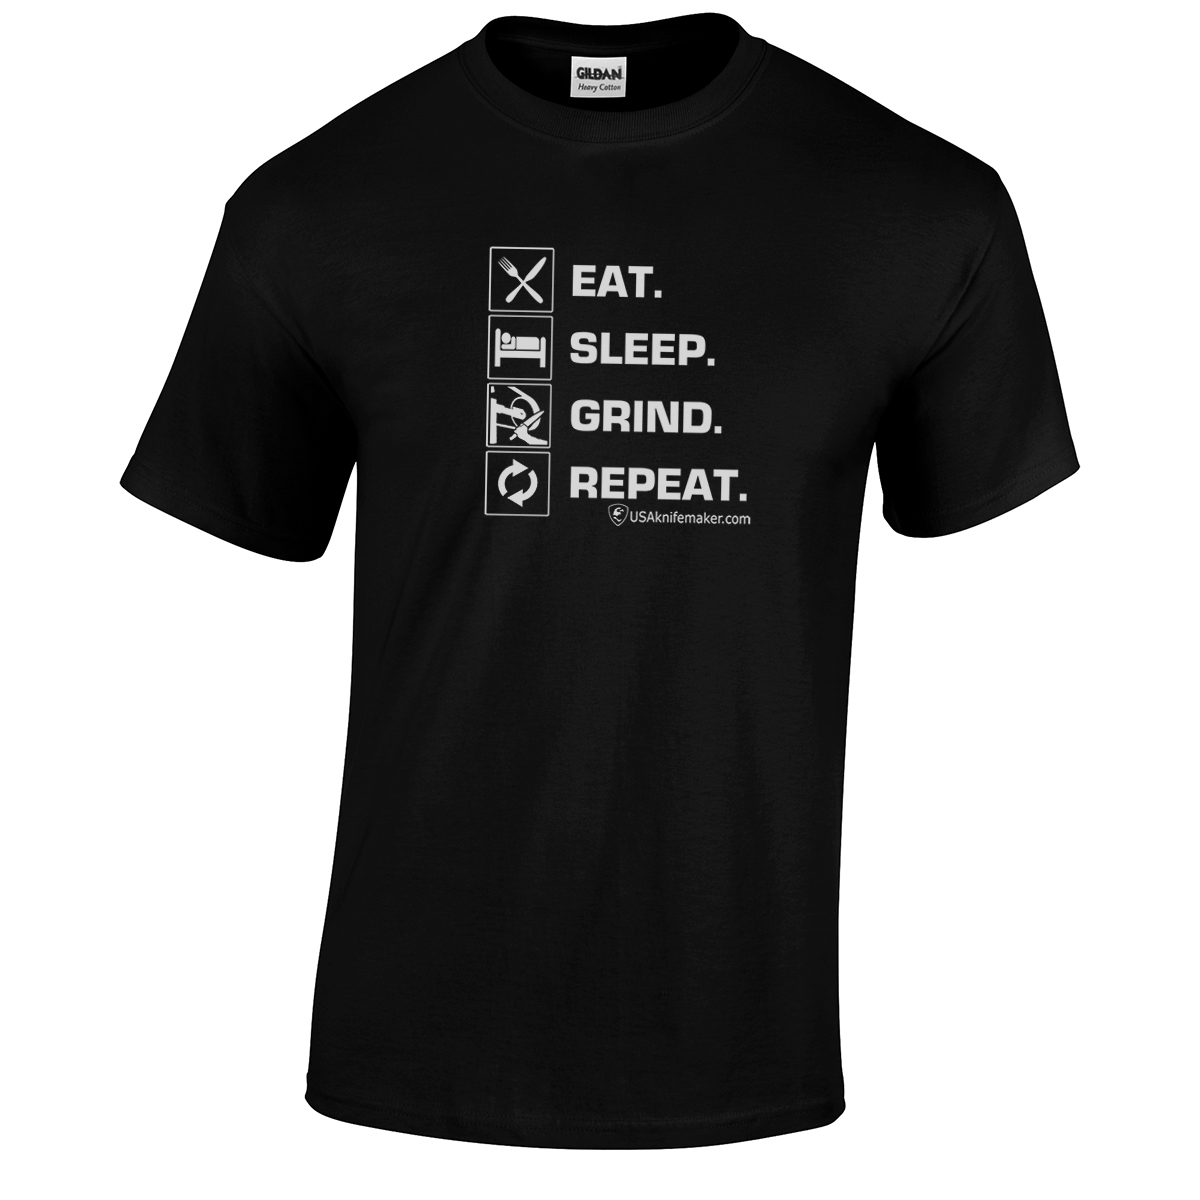 T-shirt - Eat. Sleep. Grind. Repeat. - Black - S